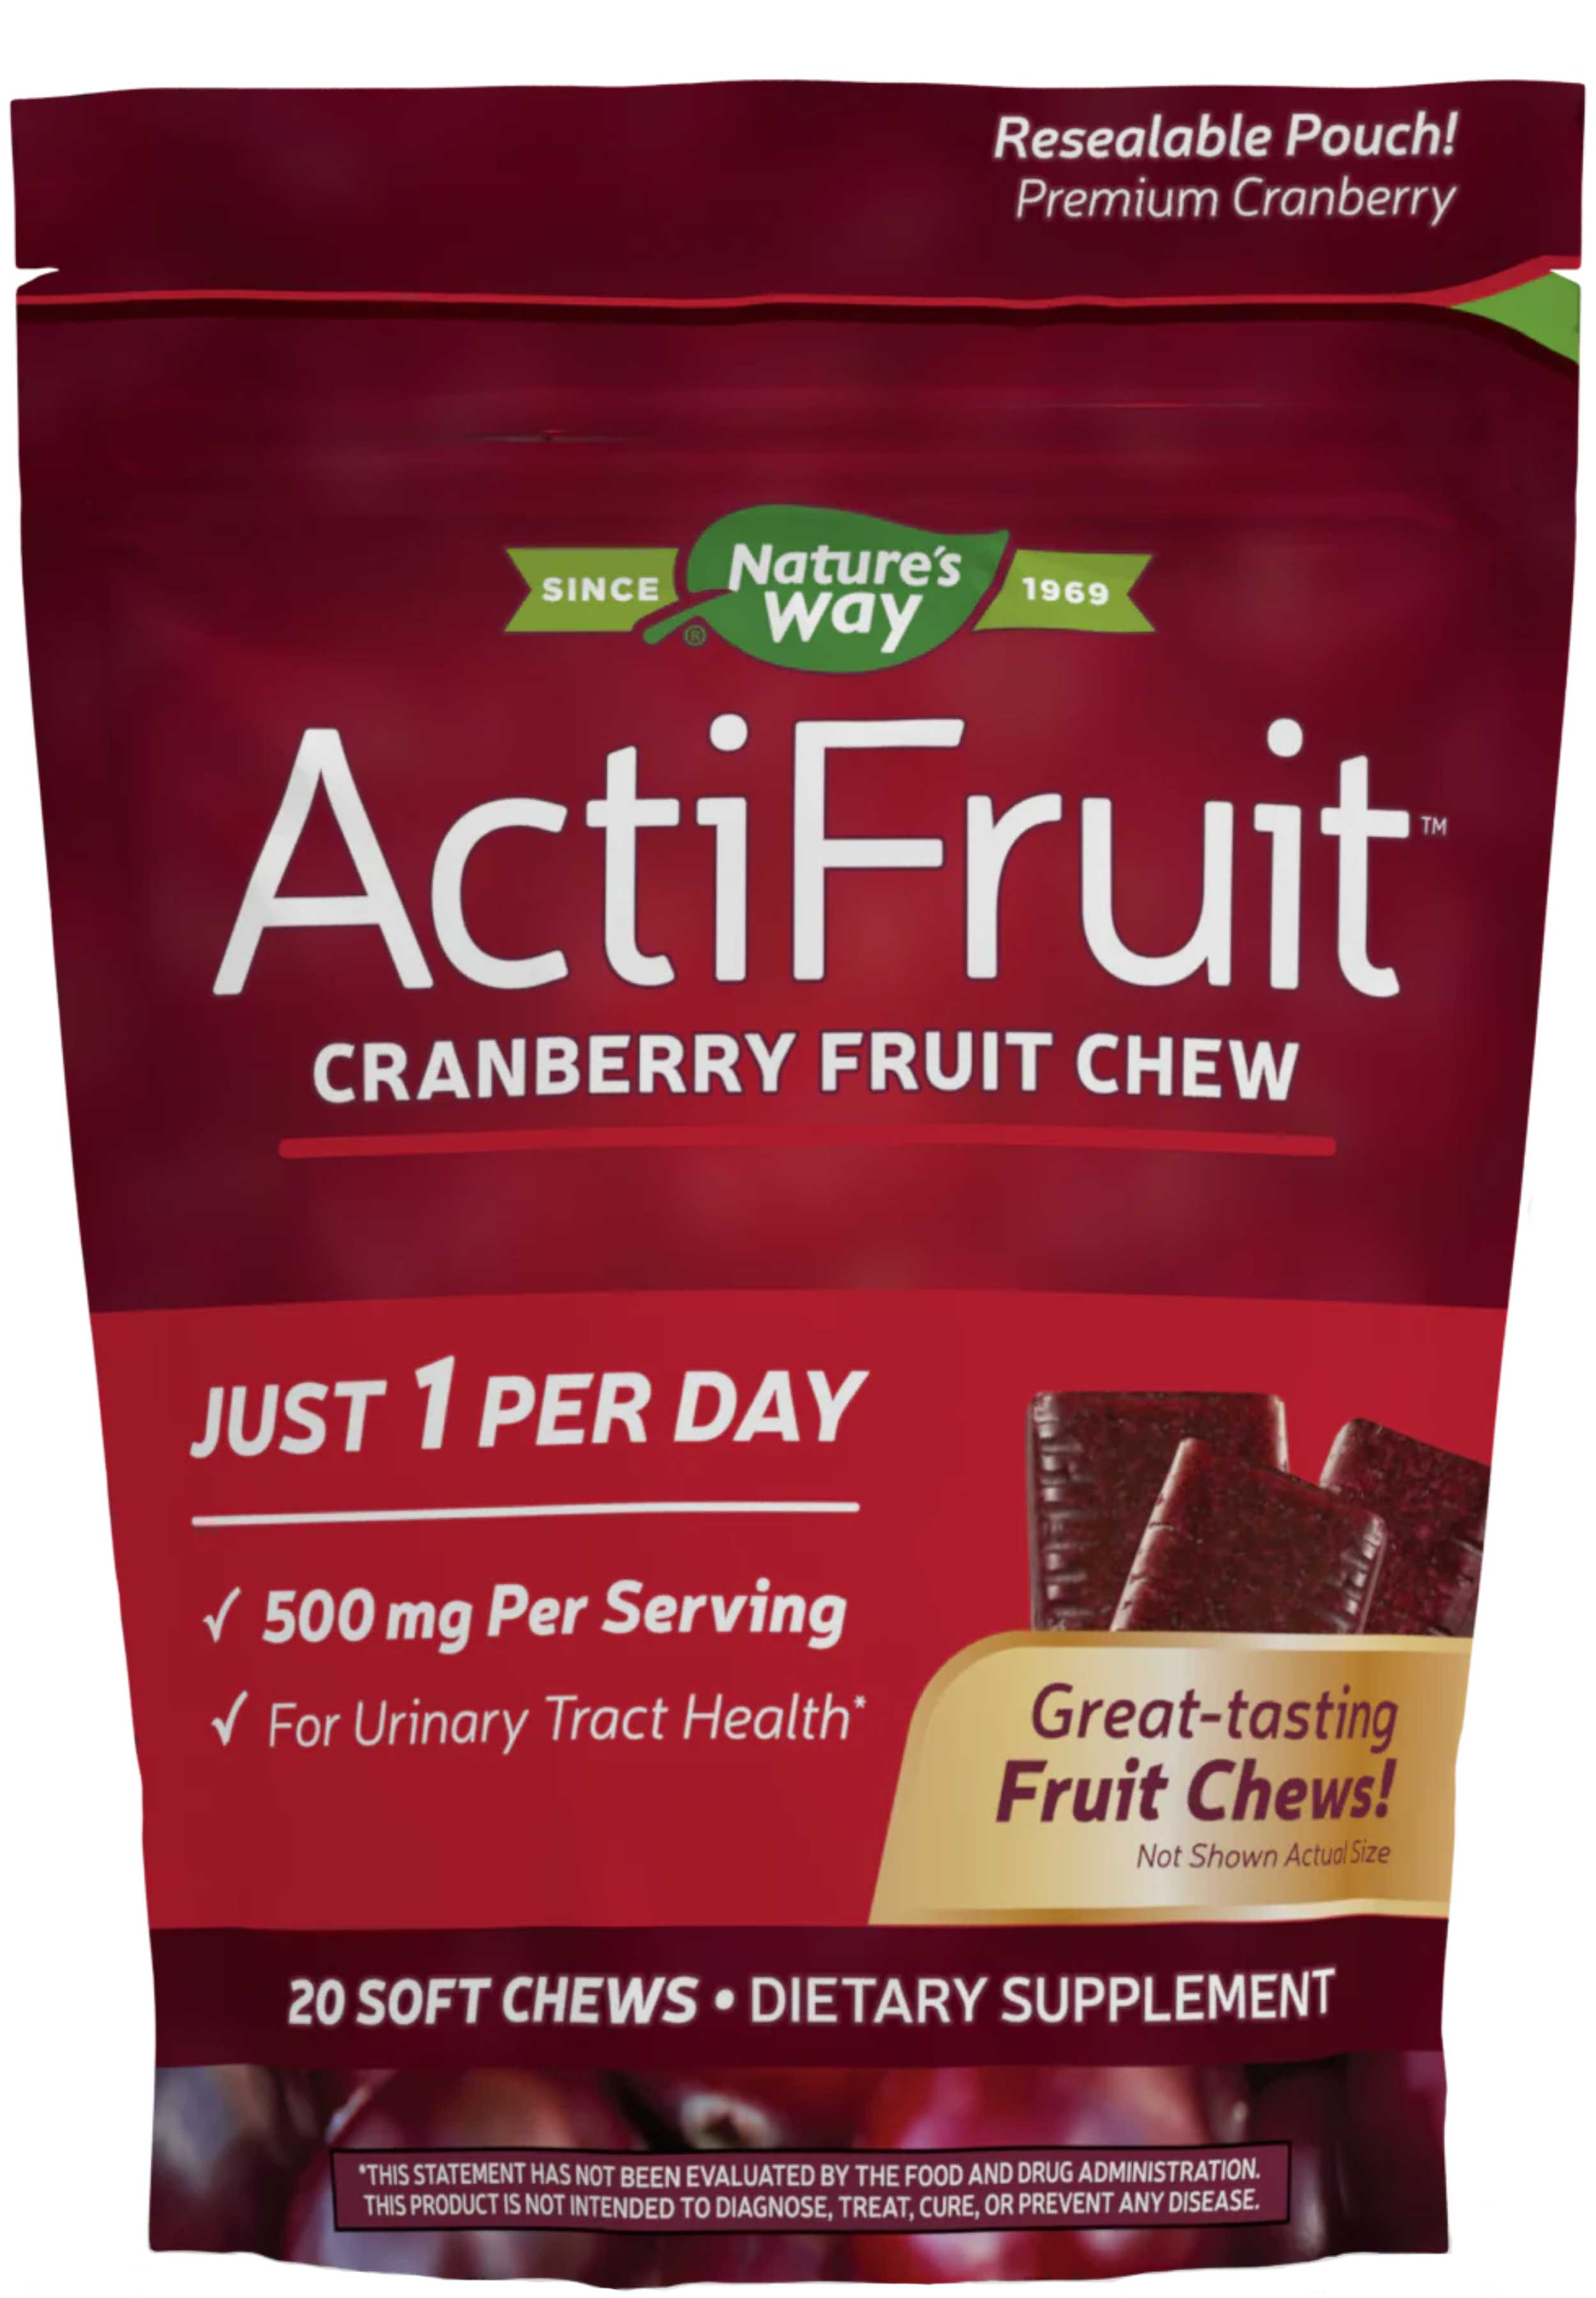 Nature's Way ActiFruit Cranberry Fruit Chew